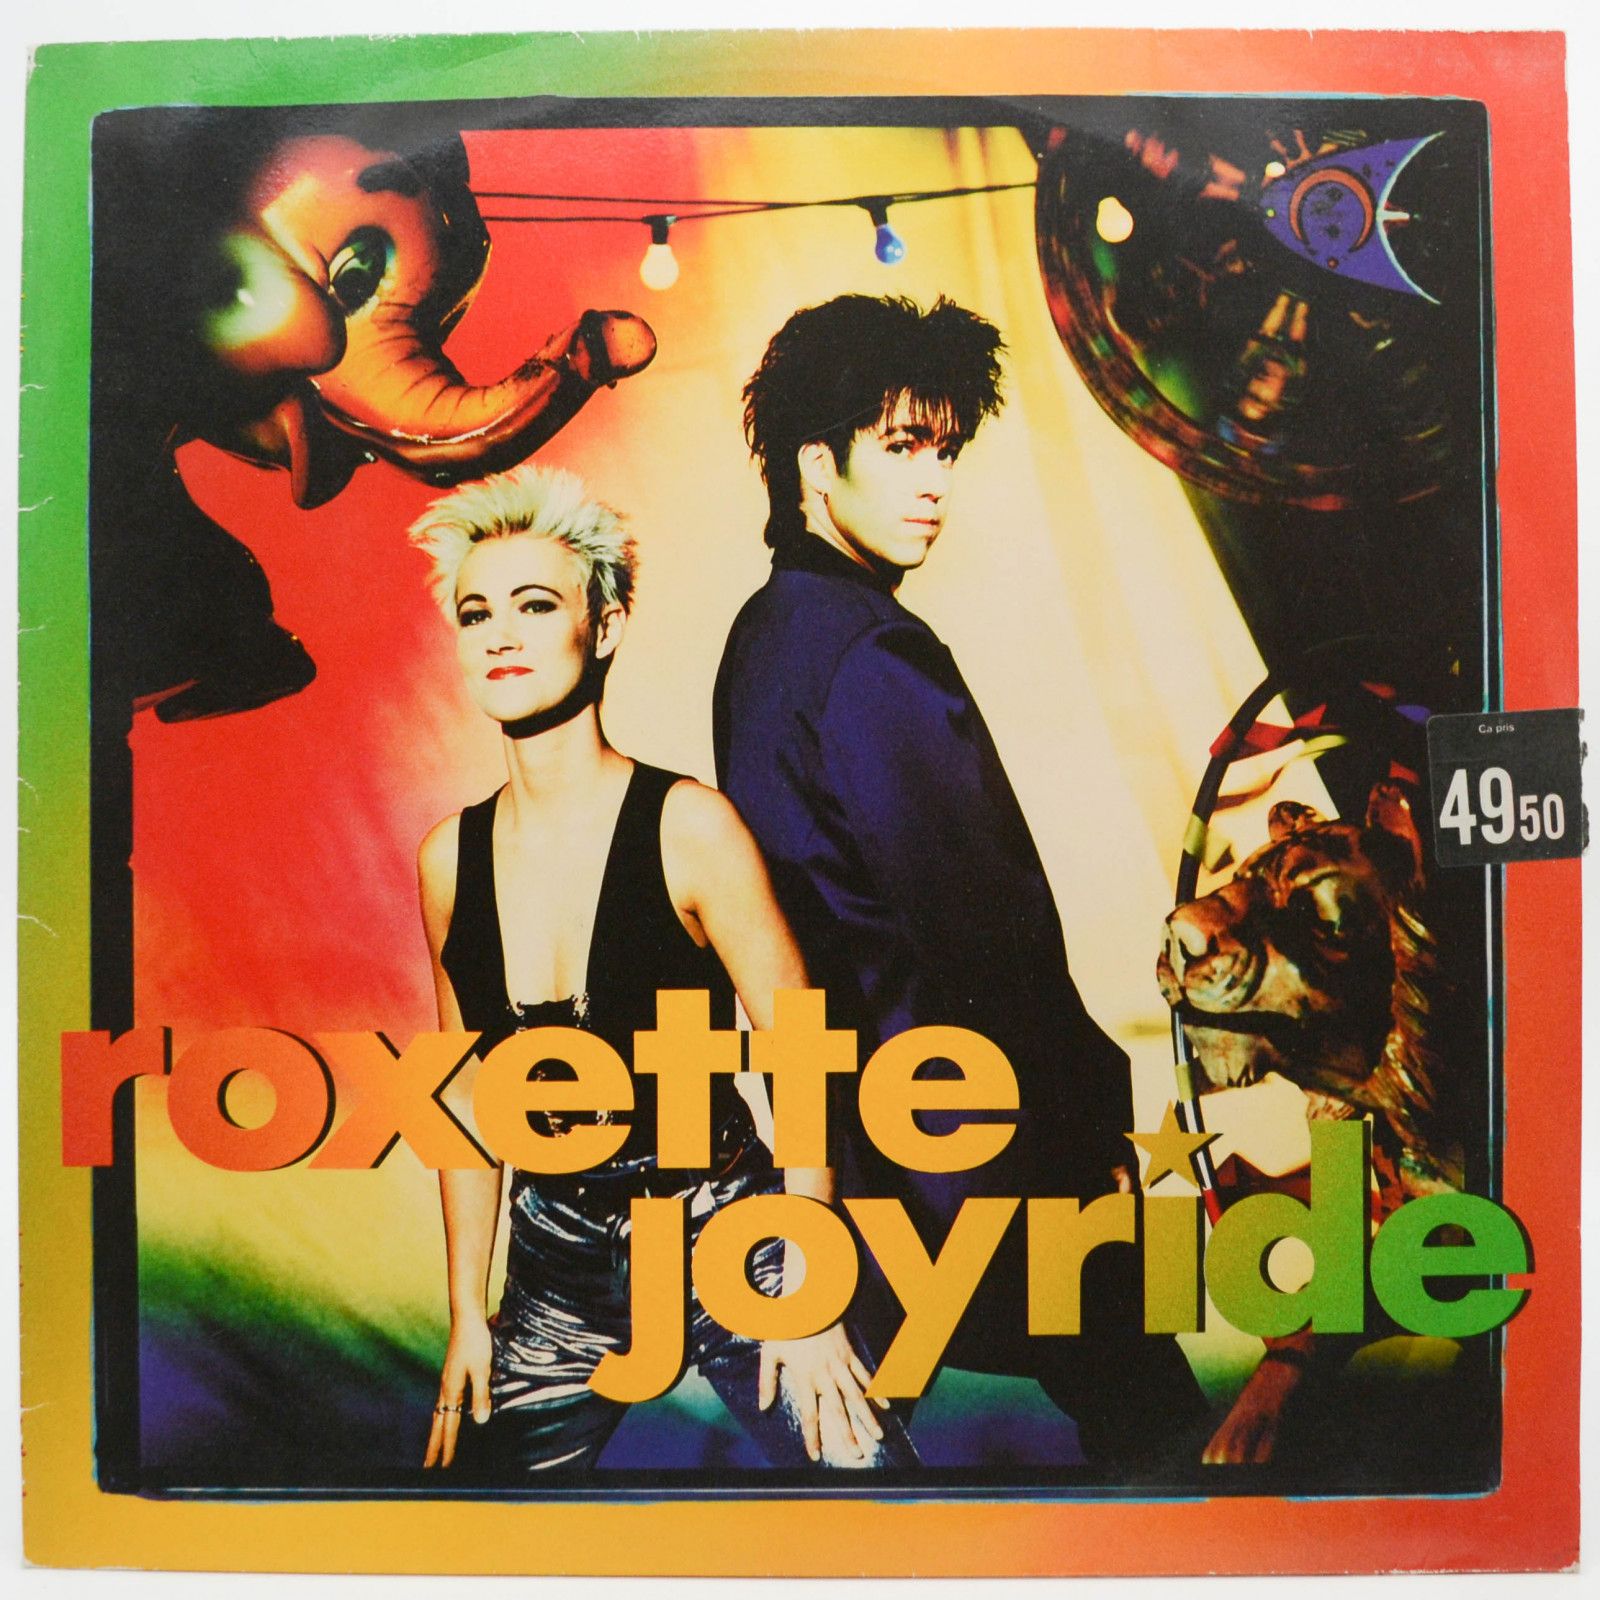 Roxette — Joyride (1-st, Sweden), 1991